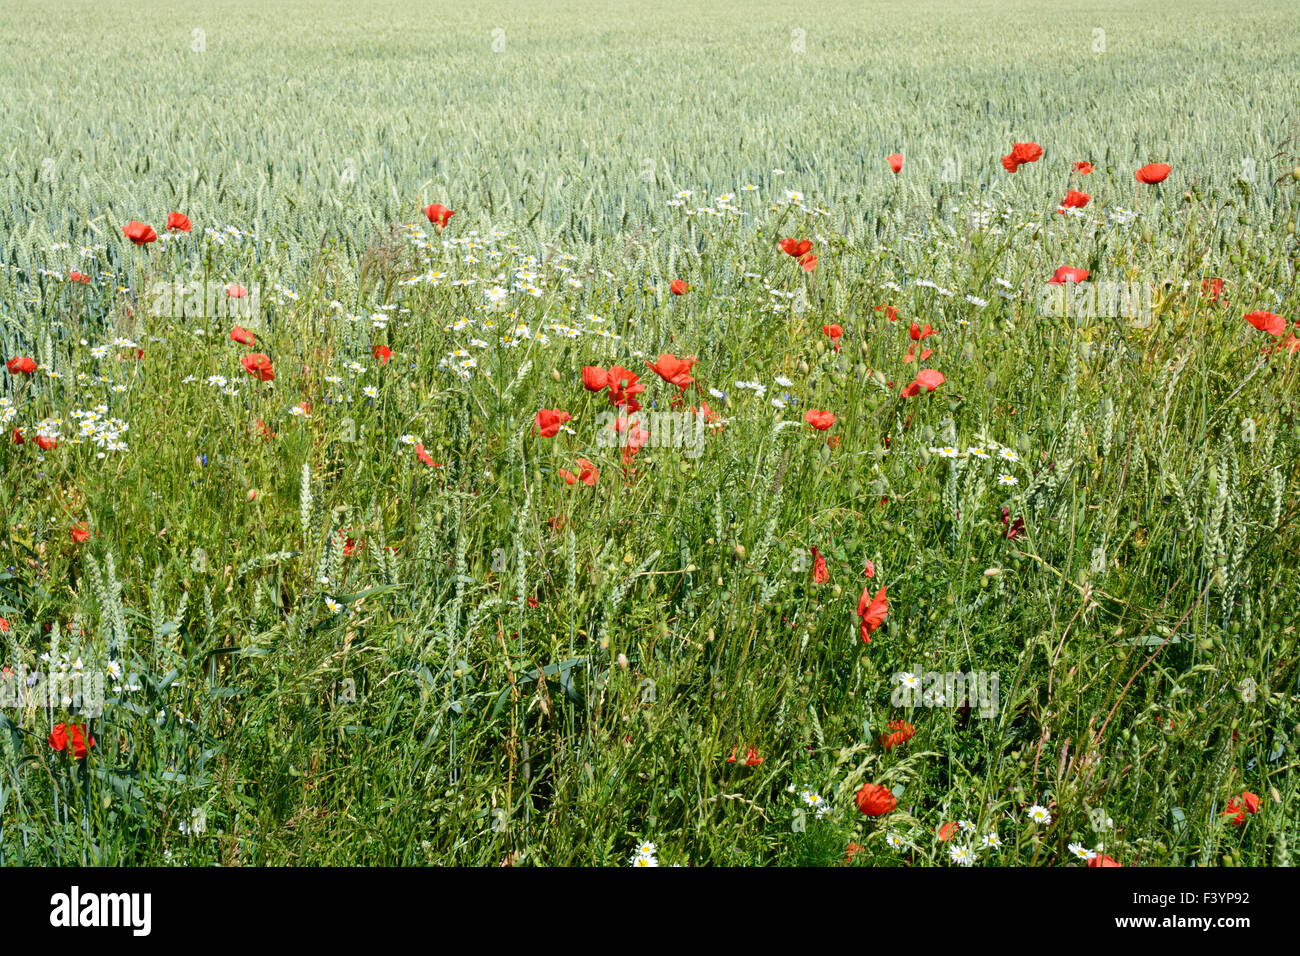 Hafer-Feld mit wilden roten Mohnblumen Stockfoto